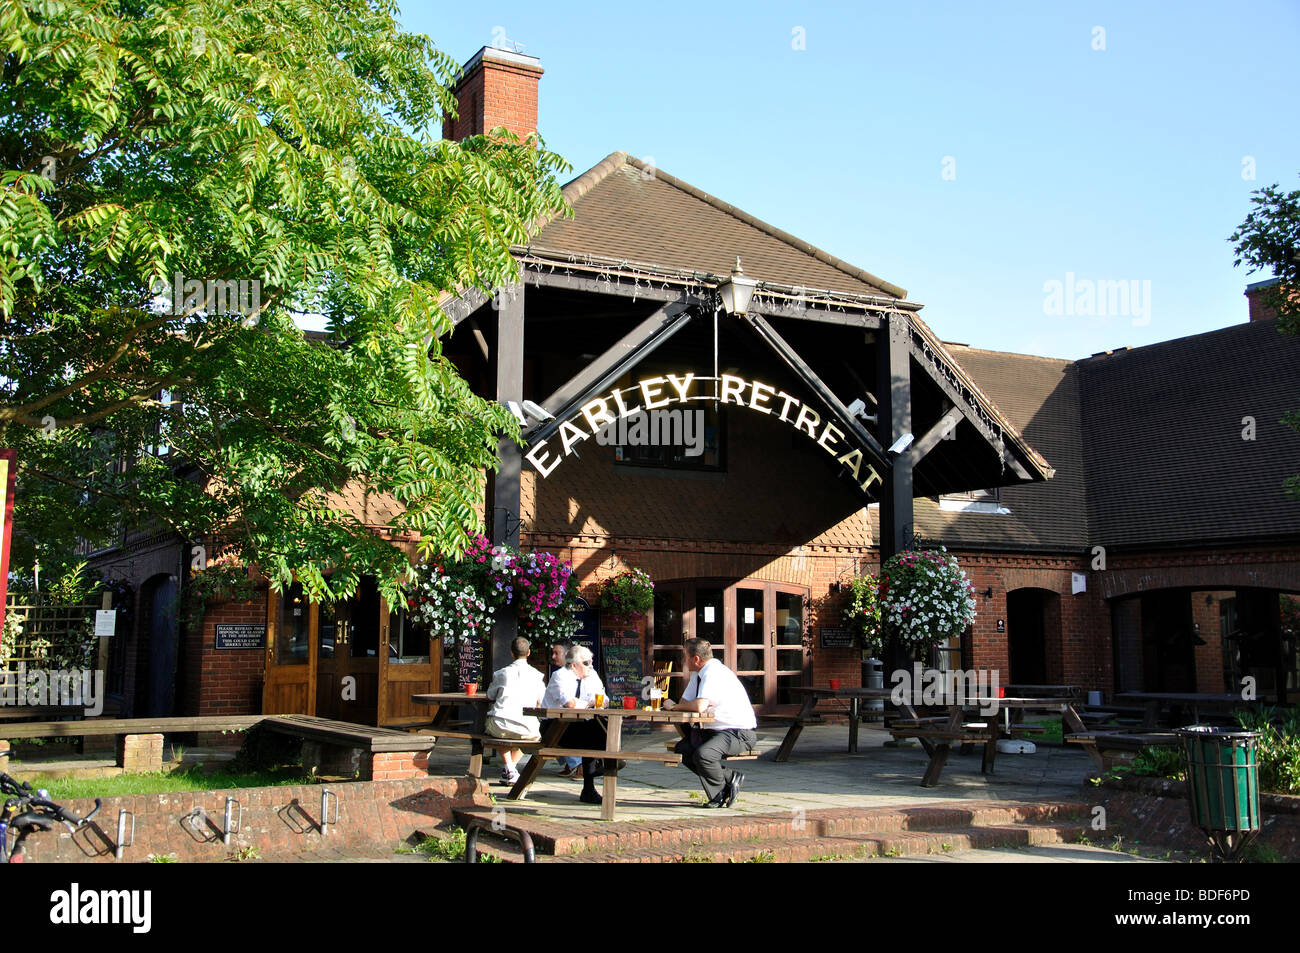 Earley Retreat Pub, Chalfont Close, Earley, Reading, Berkshire, England, United Kingdom Stock Photo